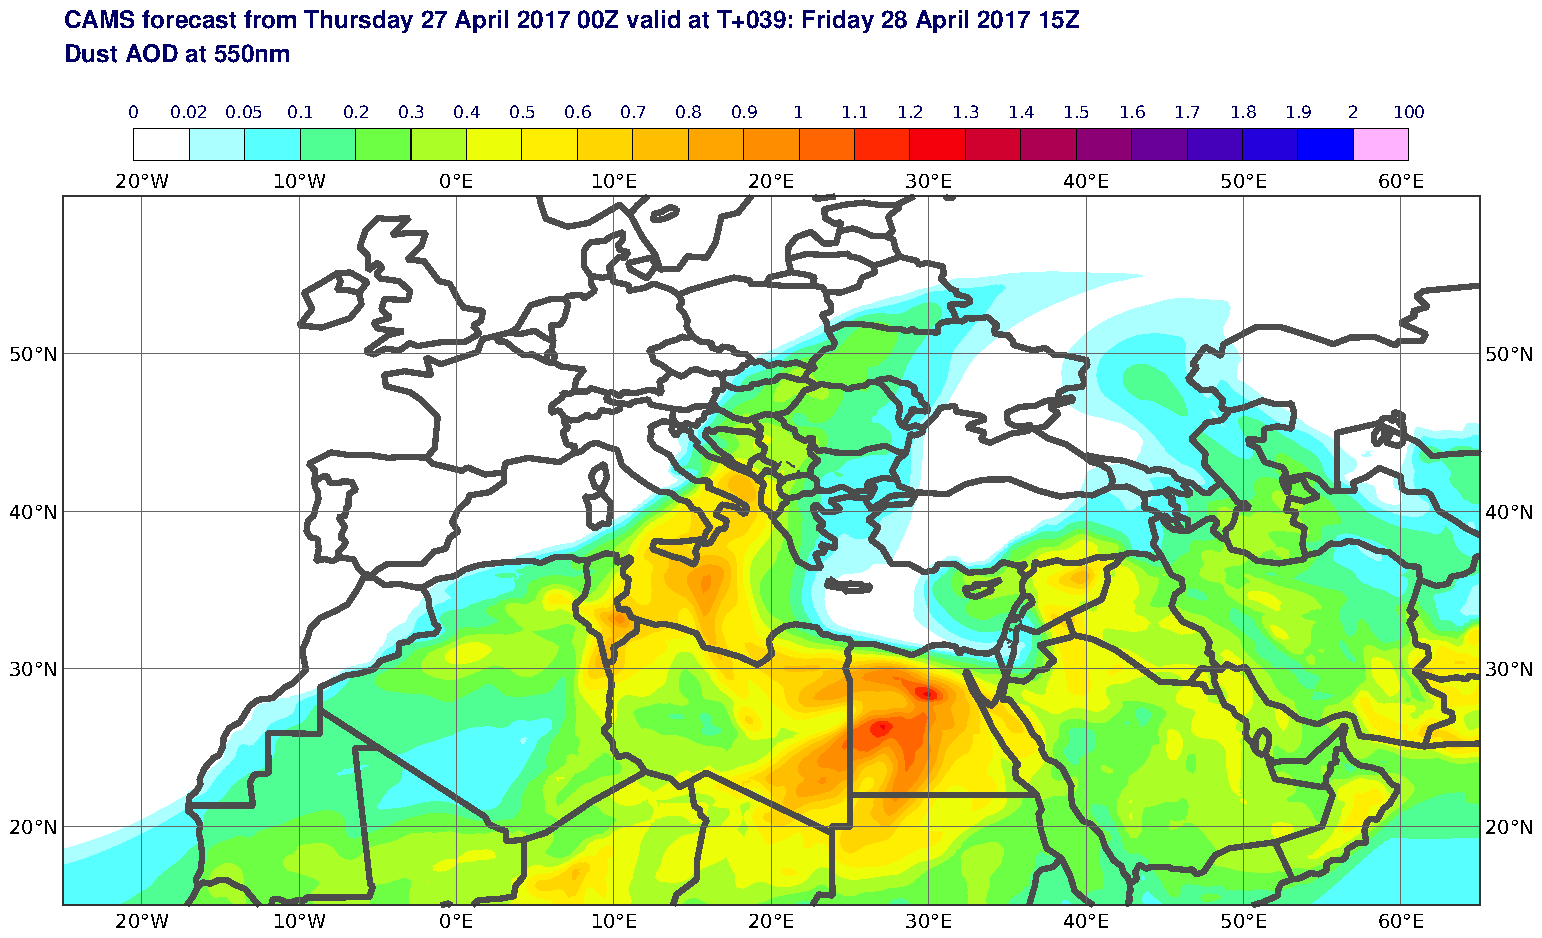 Dust AOD at 550nm valid at T39 - 2017-04-28 15:00